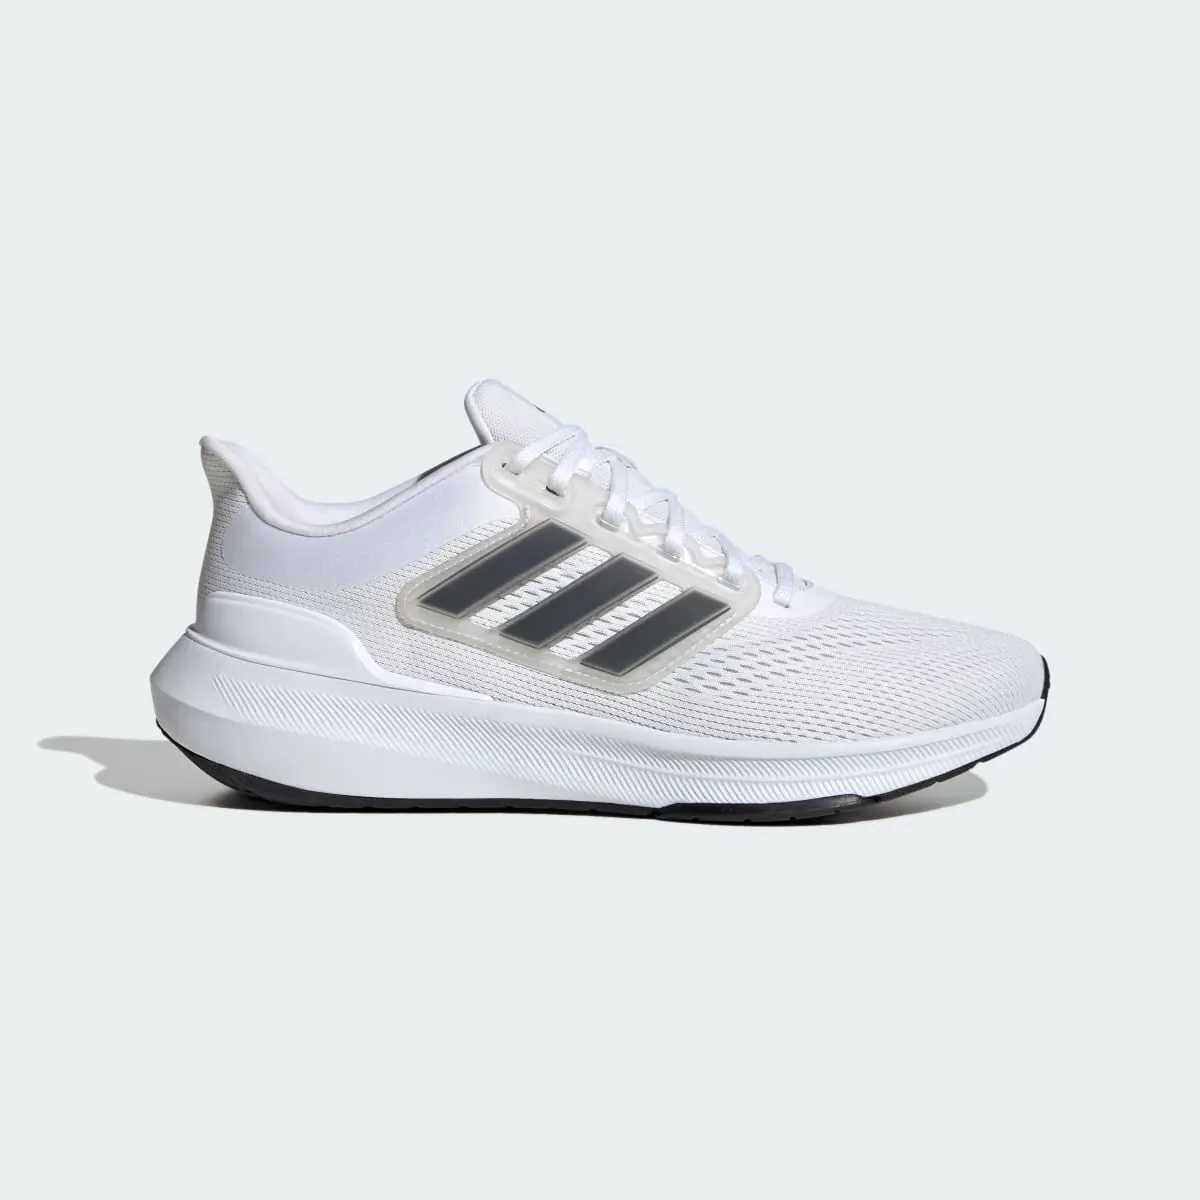 Adidas Ultrabounce Ayakkabı. 2